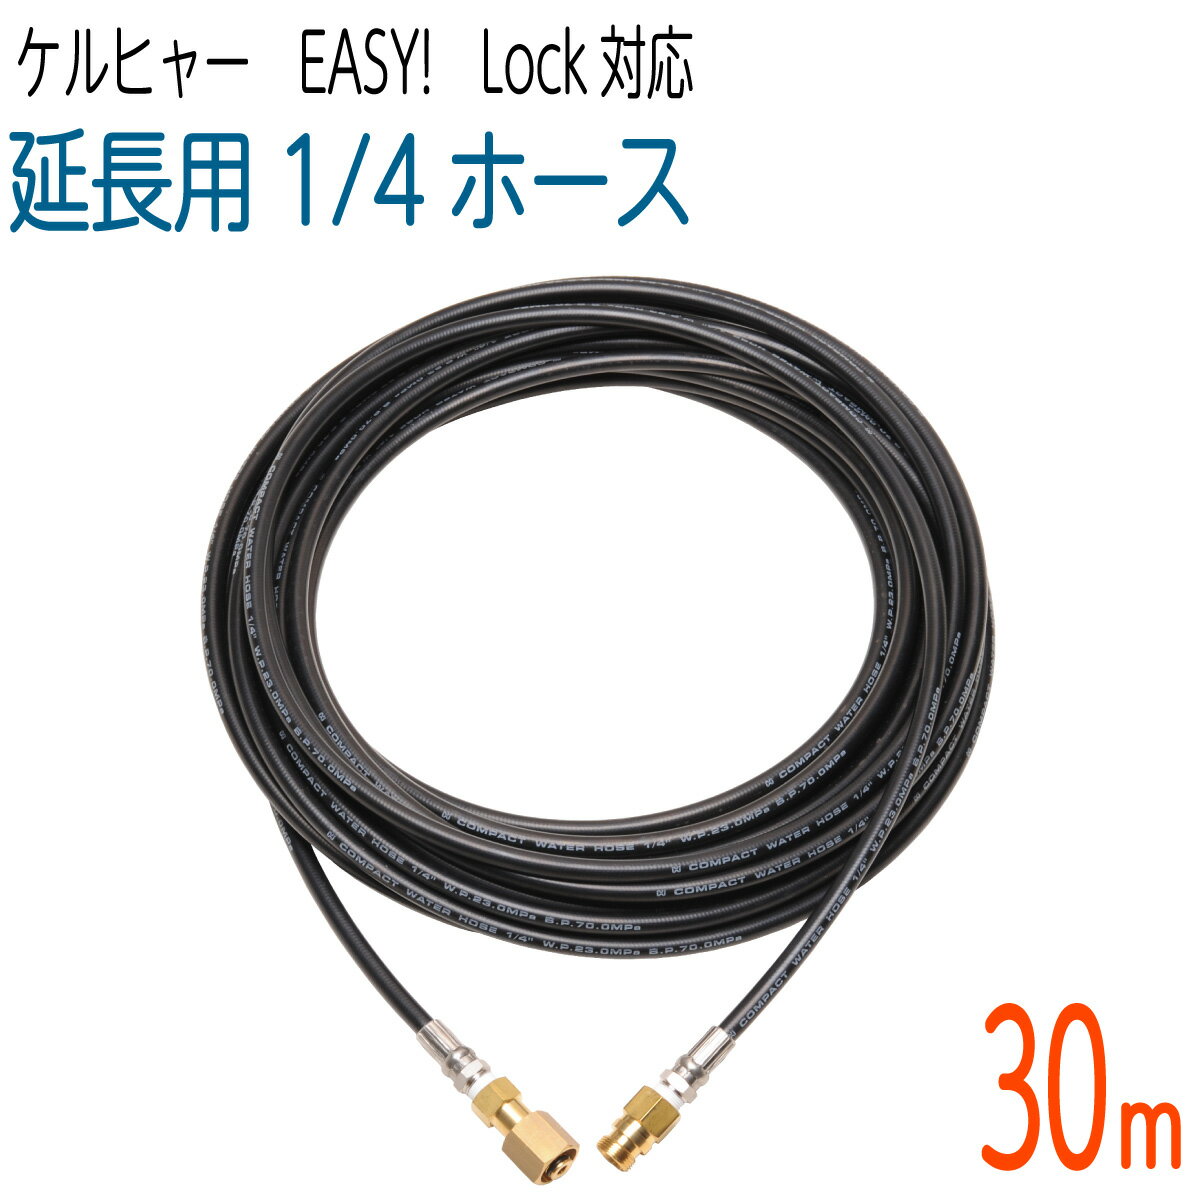 【30M】1/4サイズ 新型Easy!Lock対応 ケルヒャーHD用 延長高圧洗浄機ホース コンパクトホース